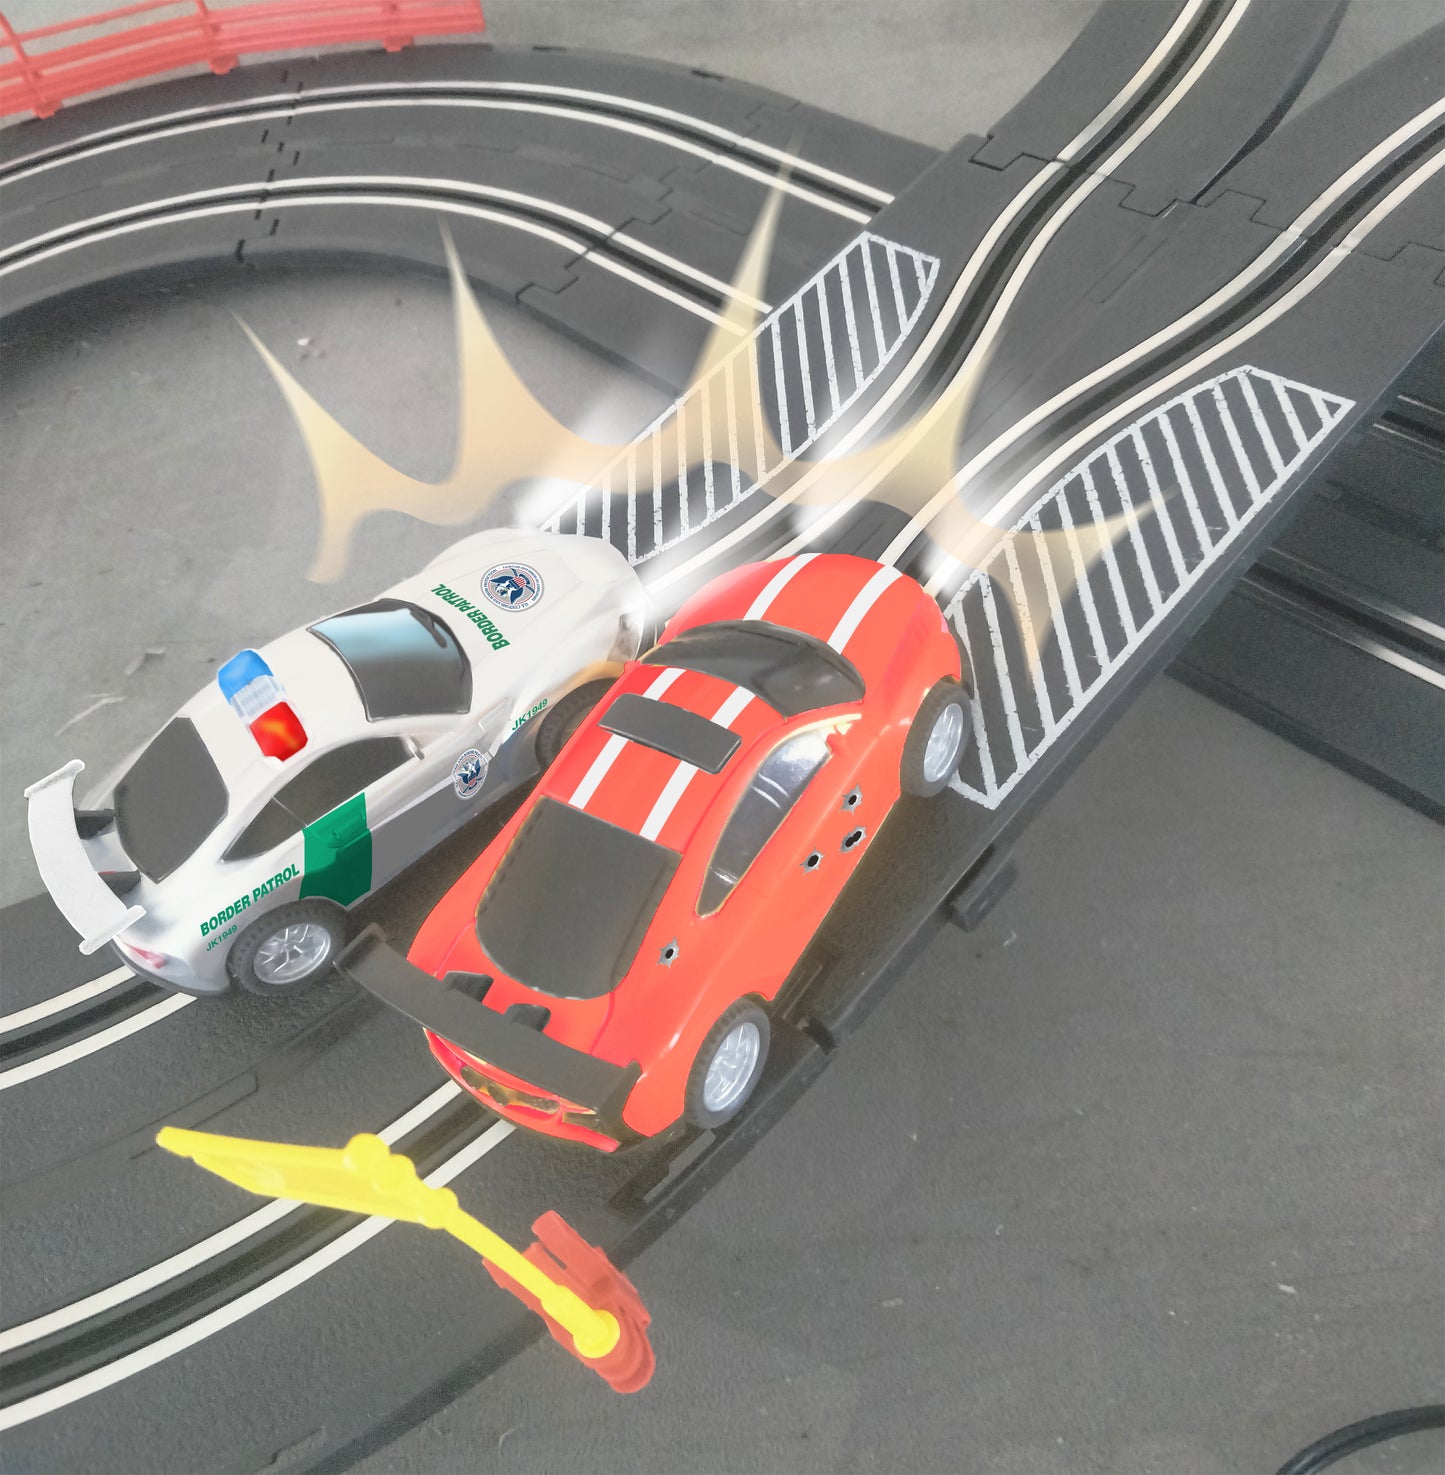 Strombecker Limited Edition Electric Slot Car Race Track Set - Border Patrol vs Vigilante Chase | Race Tracks, Cars & Accessories